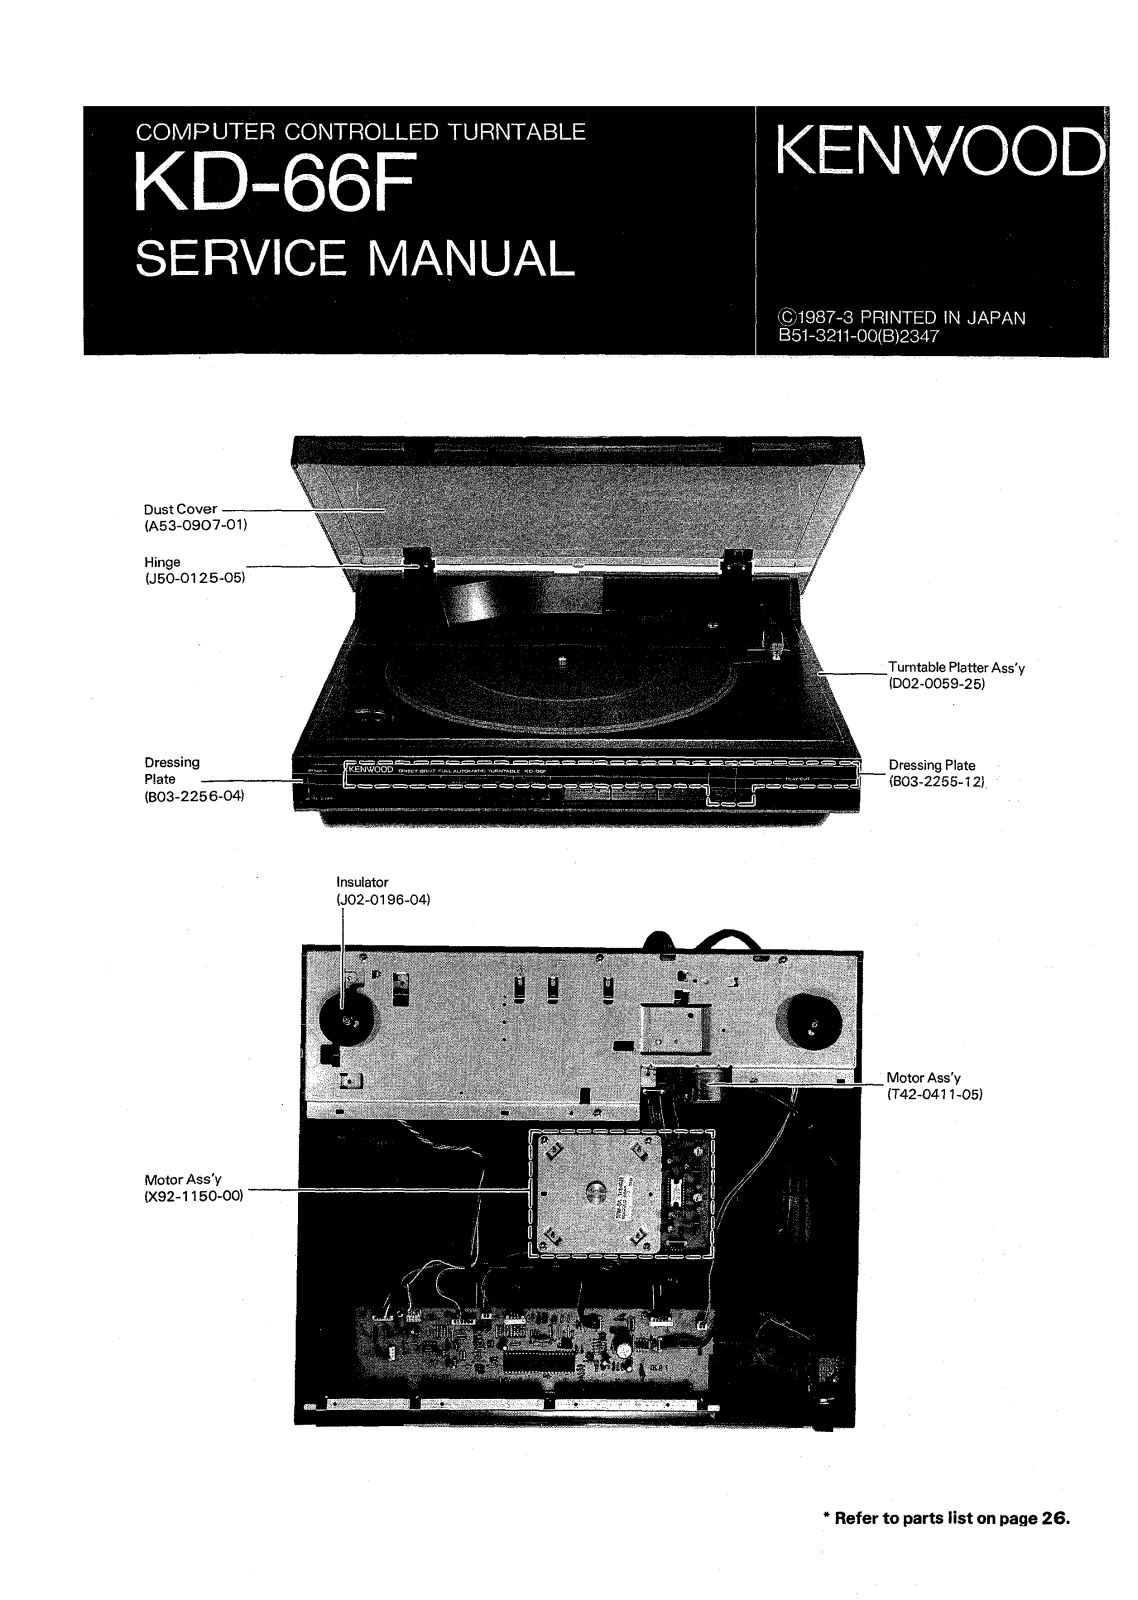 Kenwood KD-66-F Service Manual